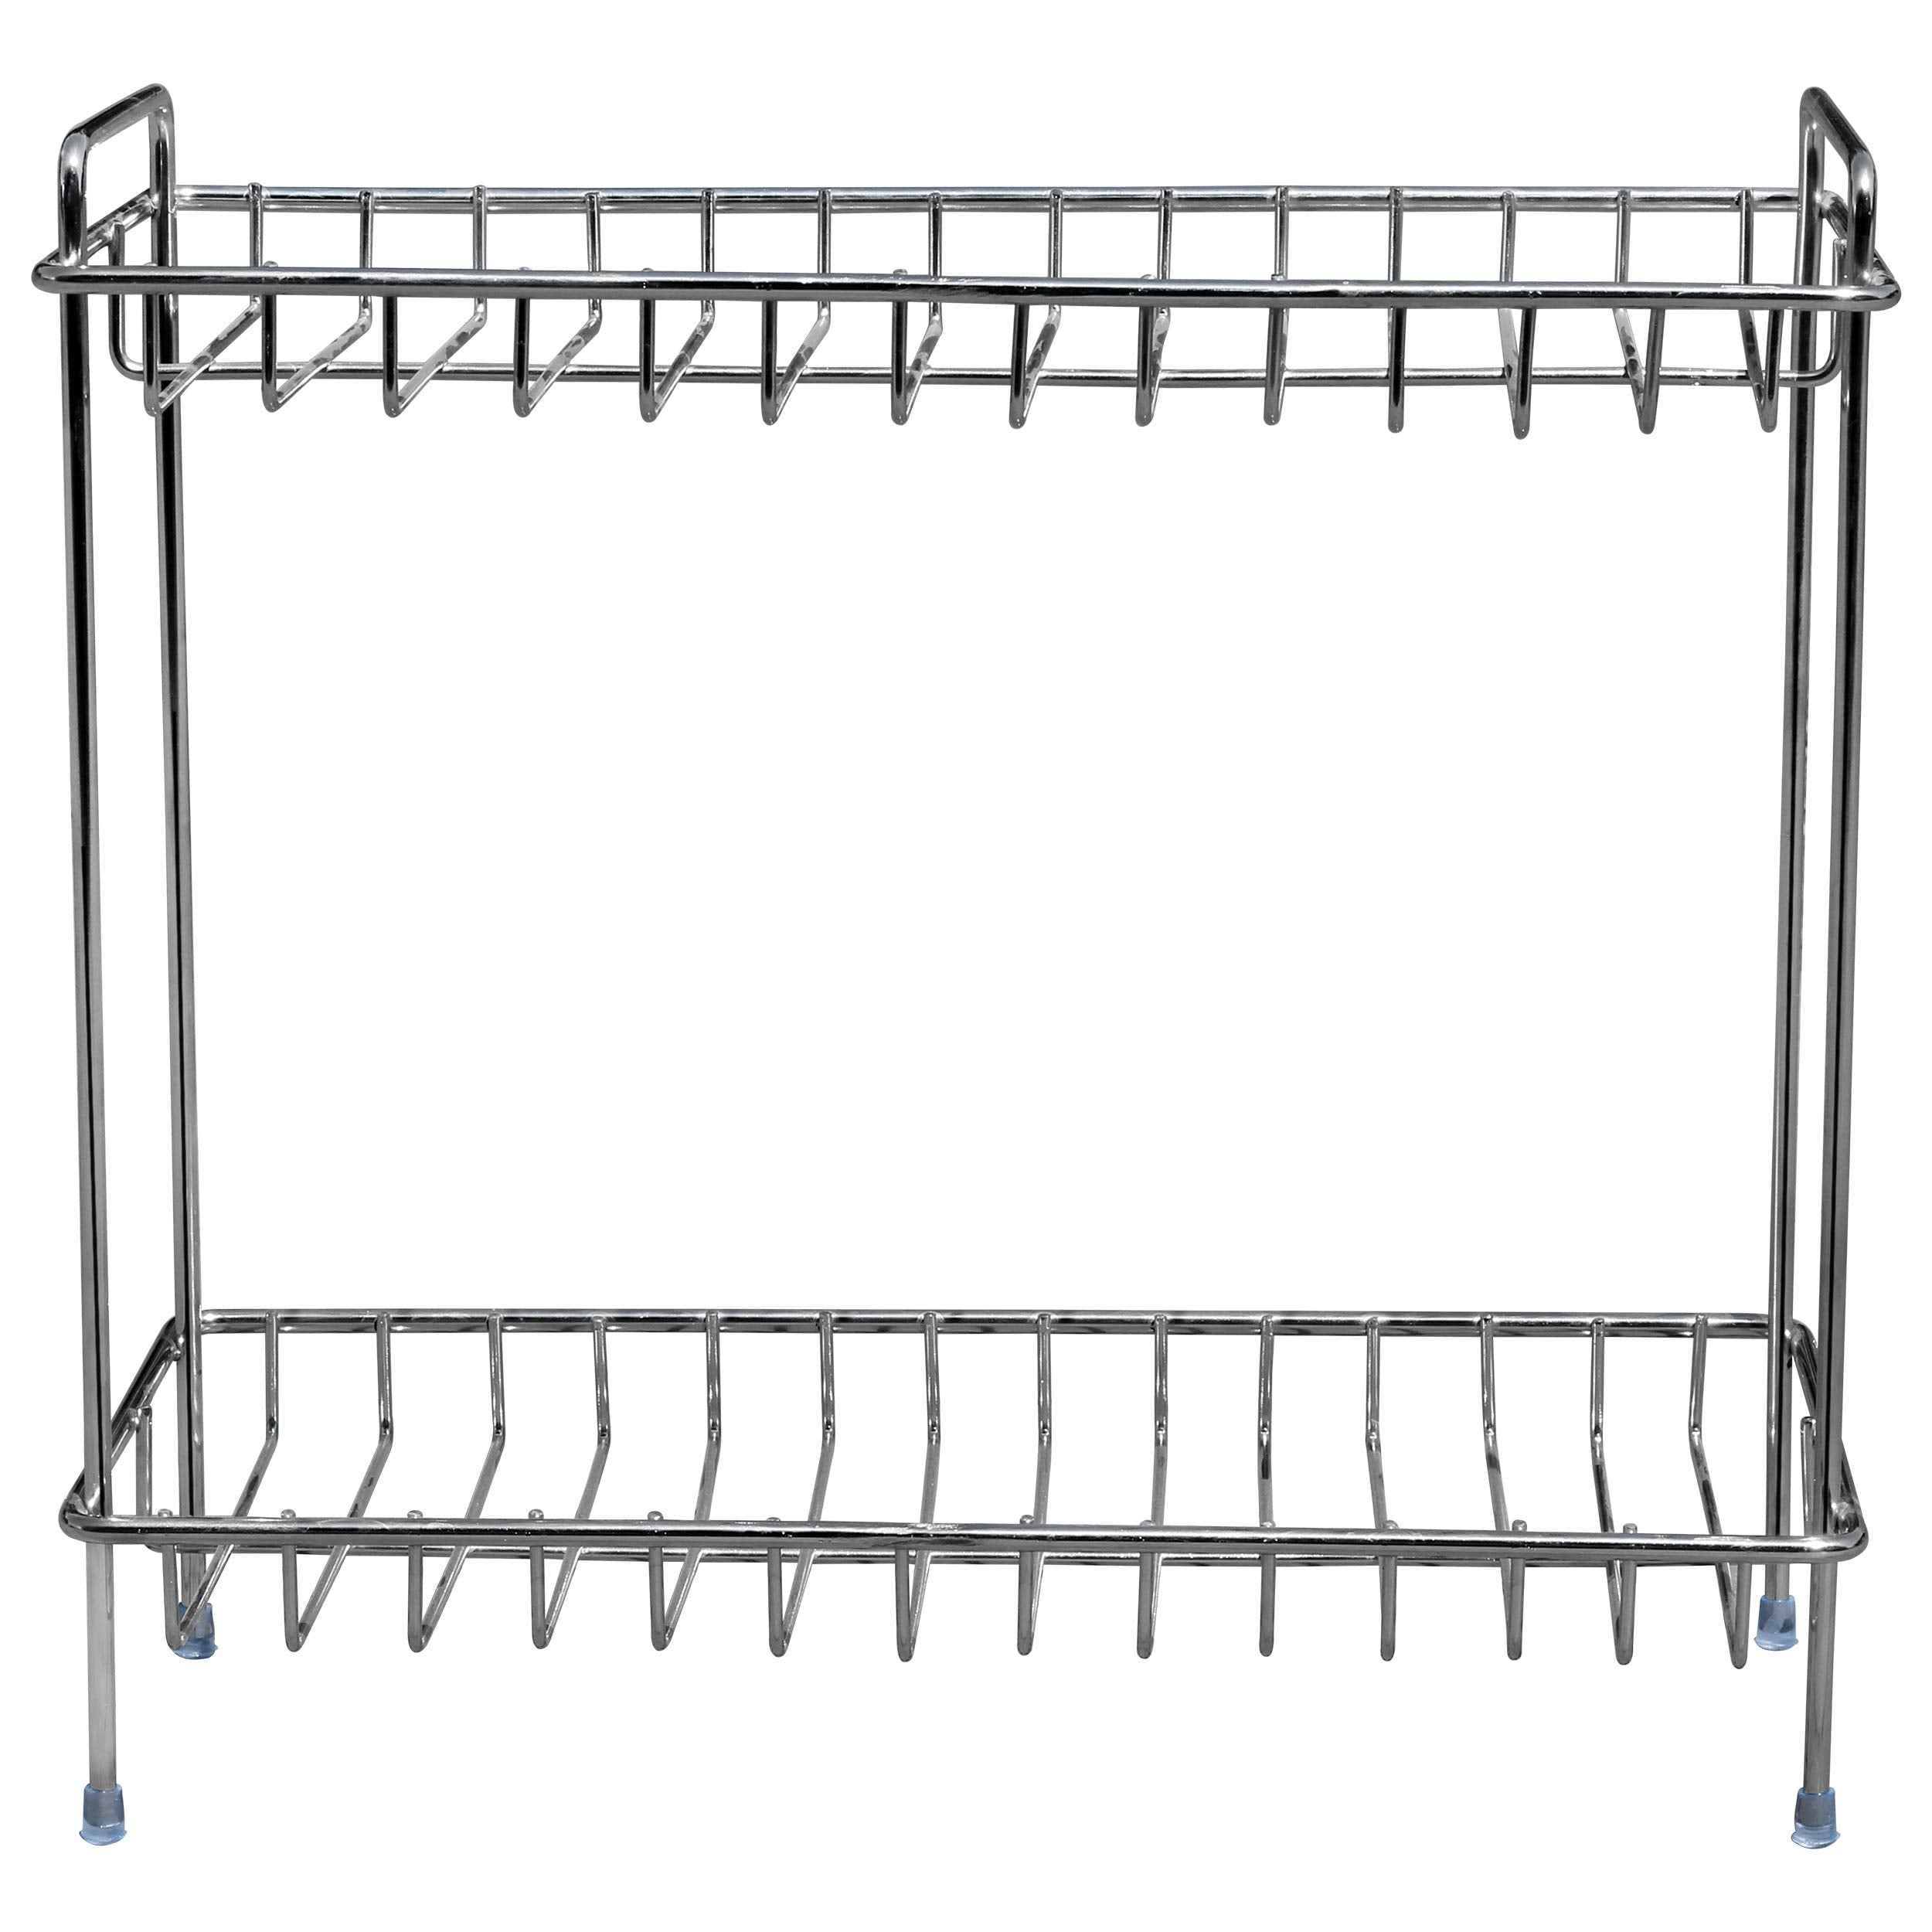 Plantex Stainless Steel Multipurpose 2-Tier Bathroom Organizer Shelf/Rack/Stand/Organizer/Bathroom Accessories (Chrome)